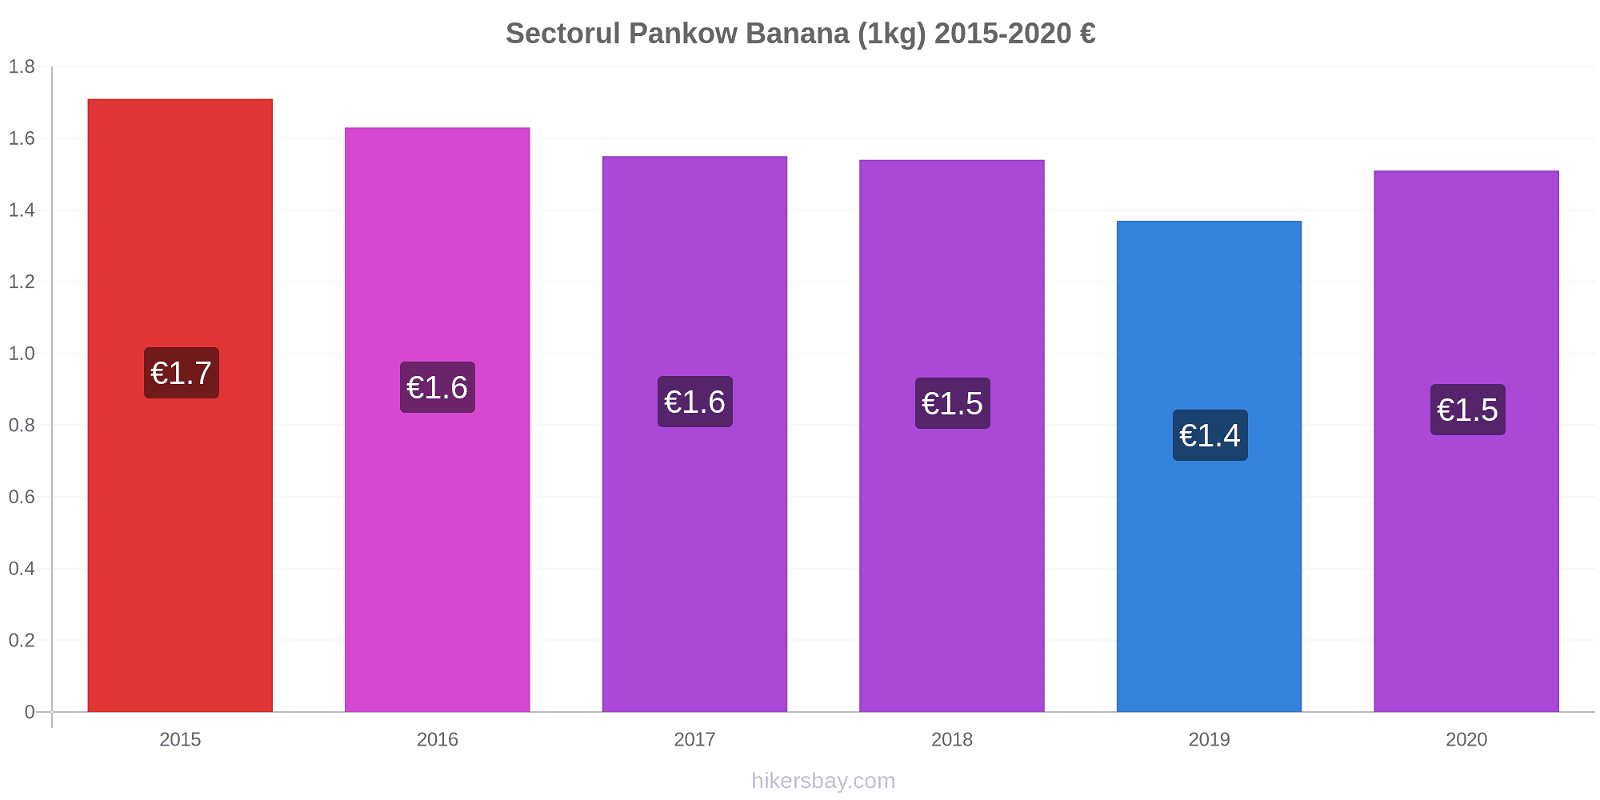 Sectorul Pankow modificări de preț Banana (1kg) hikersbay.com